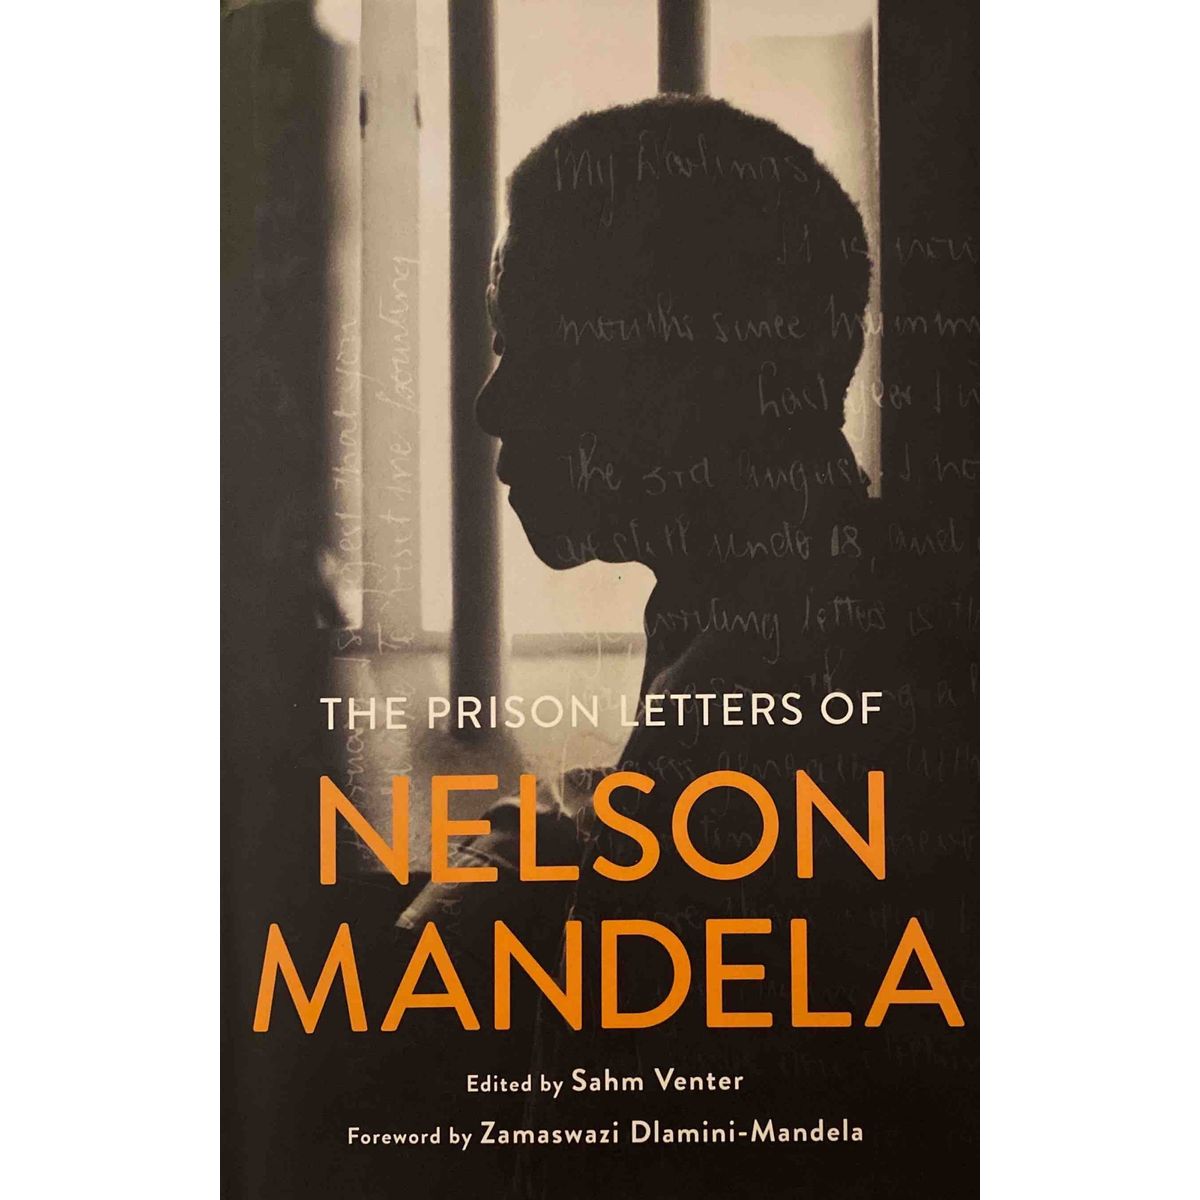 ISBN: 9781631495465 / 1631495461 - The Prison Letters of Nelson Mandela by Sahm Venter, 1st Edition [2018]